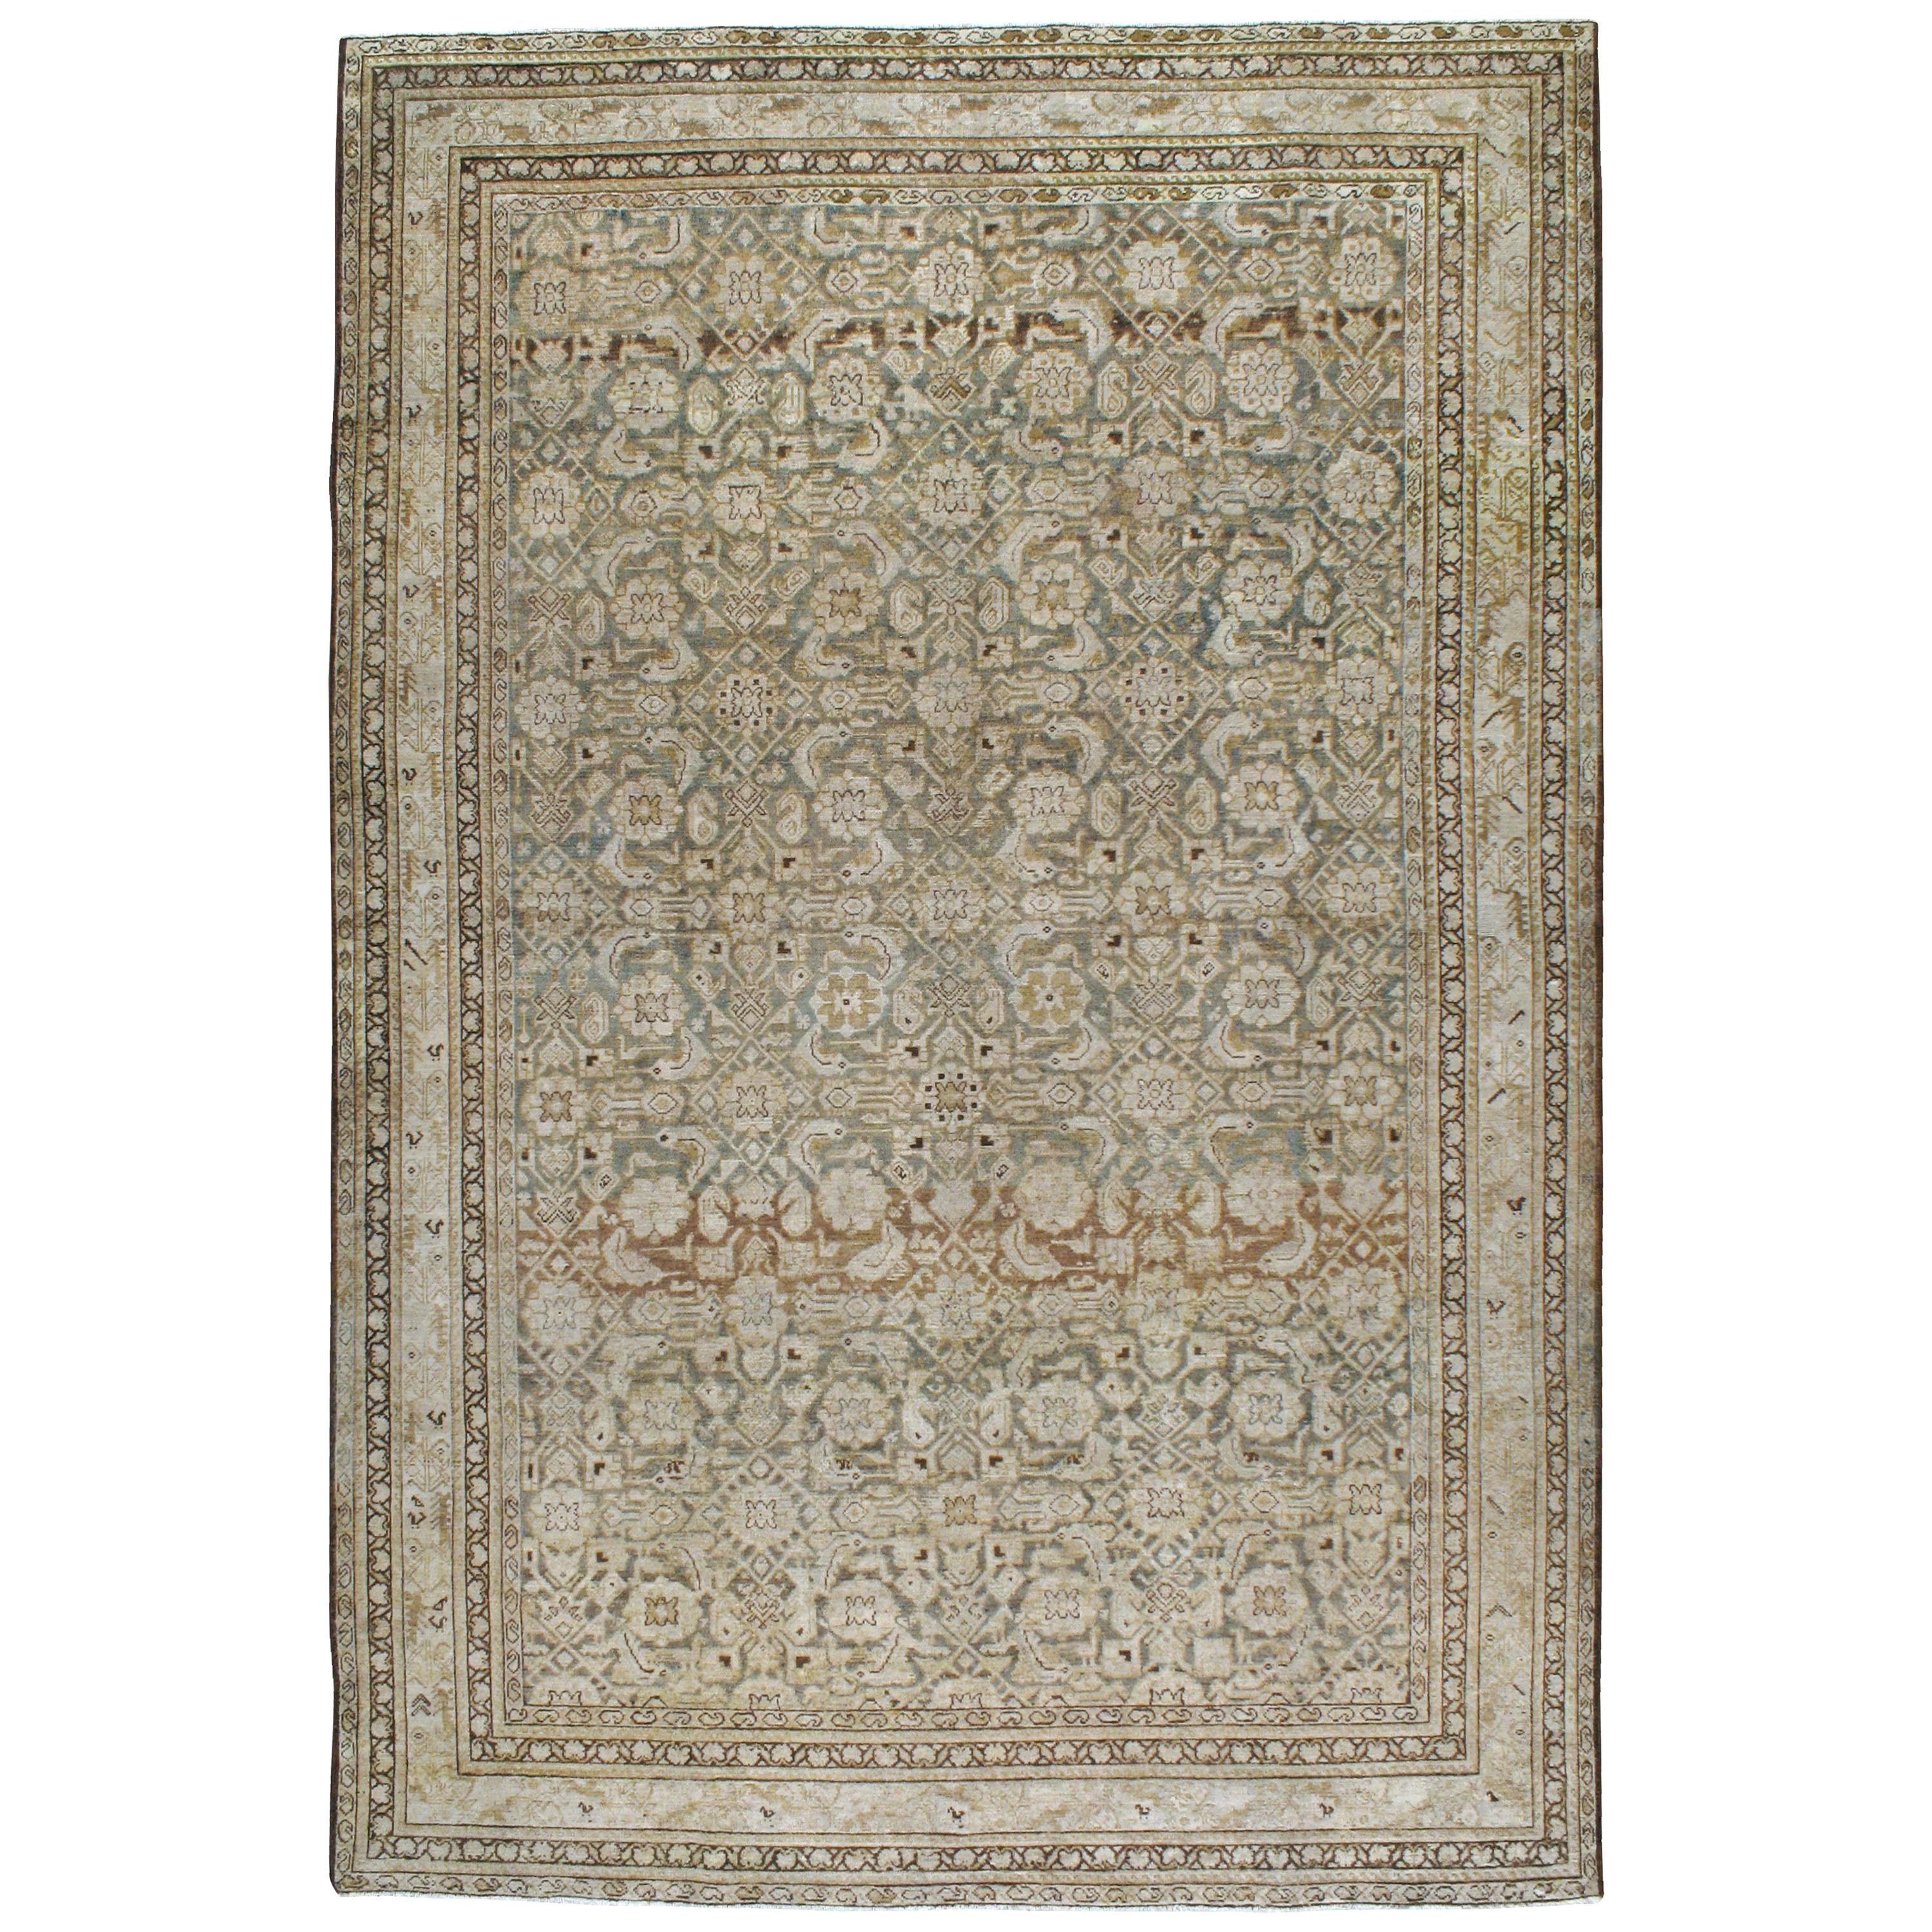 Antique Persian Malayer Carpet